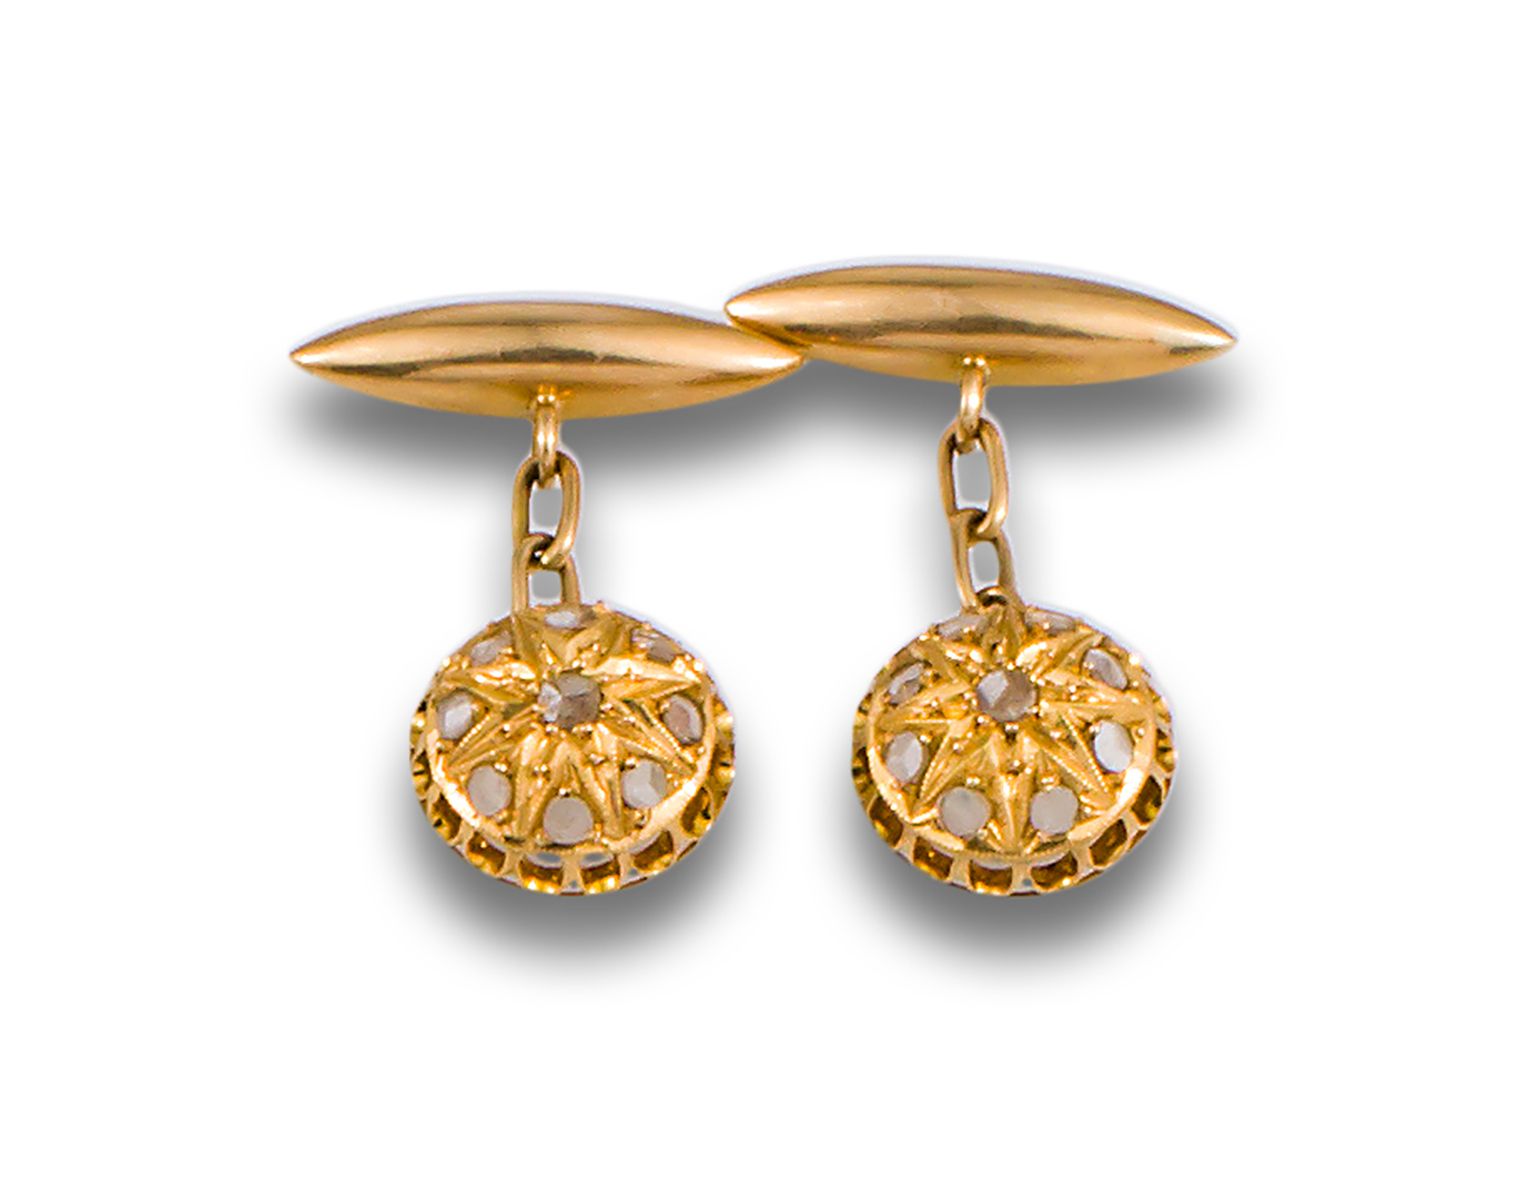 ANTIQUE CUFFLINKS, YELLOW GOLD, AND DIAMONDS Antique charro cufflinks in 18kt ye&hellip;